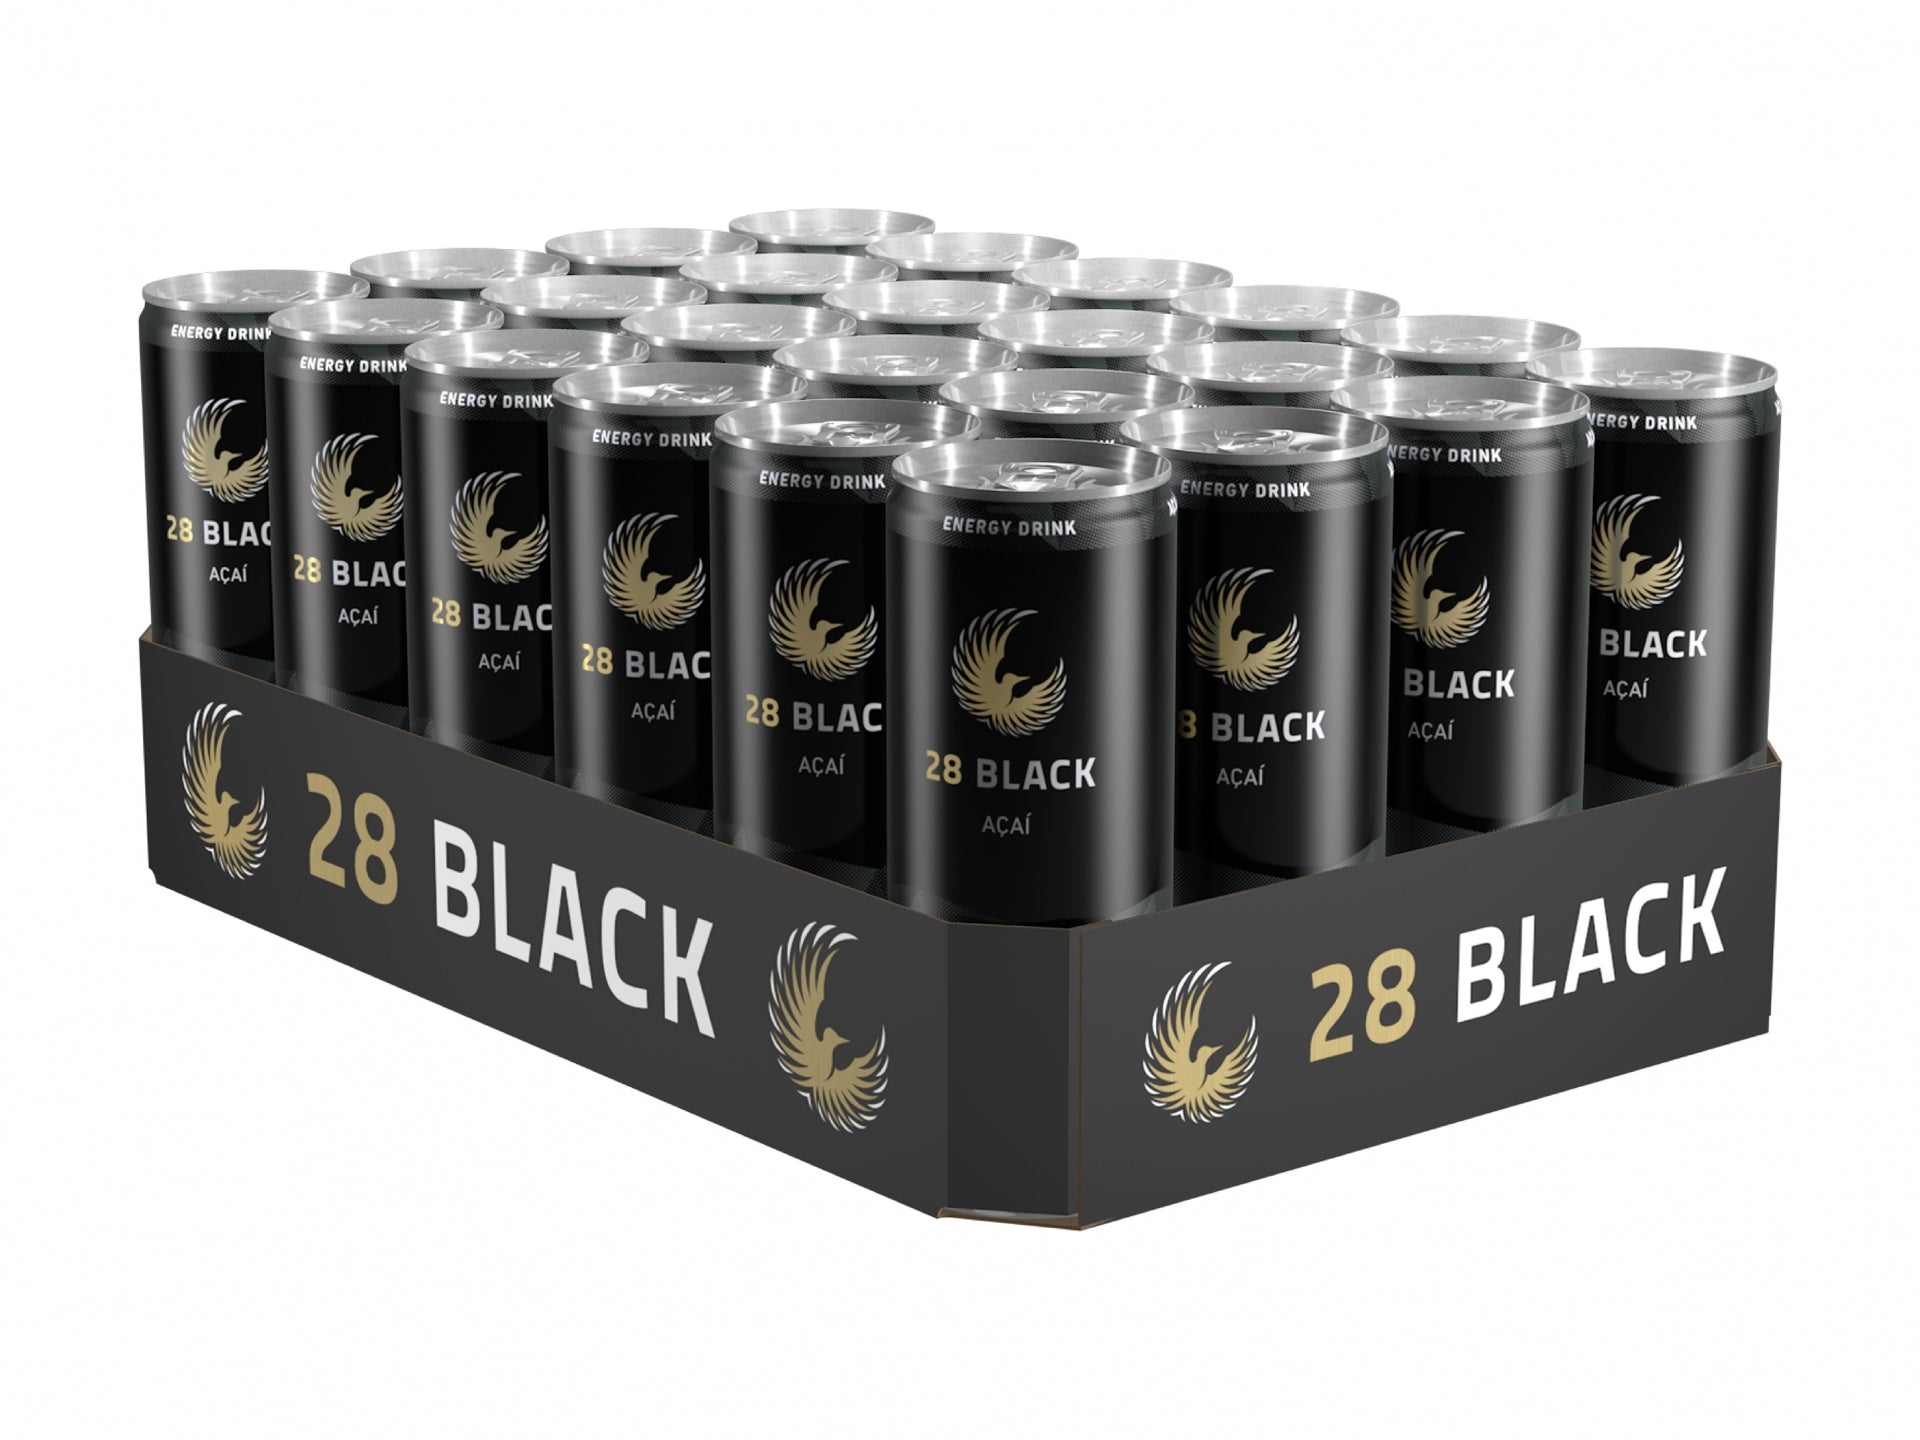 Energy Drink 28 Black - Acai